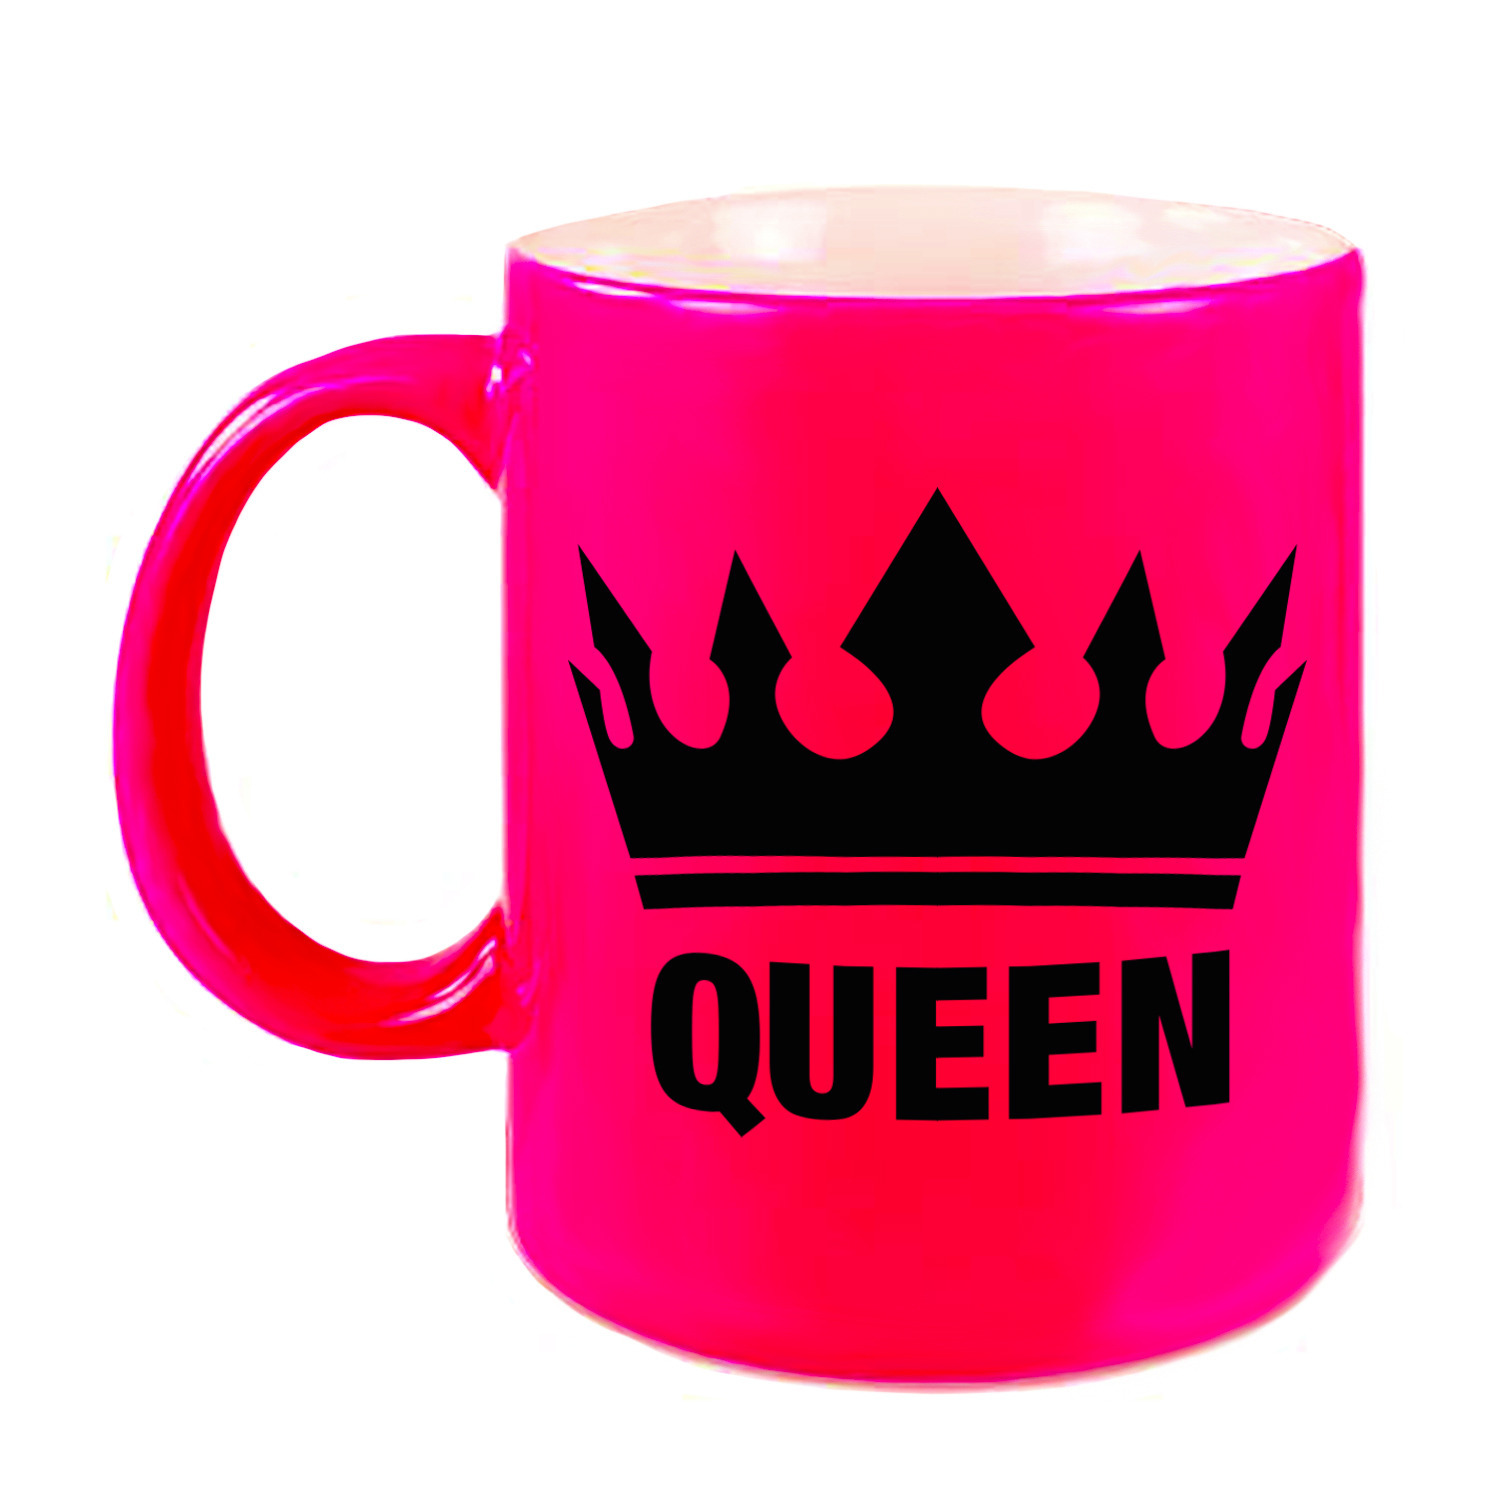 Cadeau Queen mok- beker fluor neon roze met zwarte bedrukking 300 ml